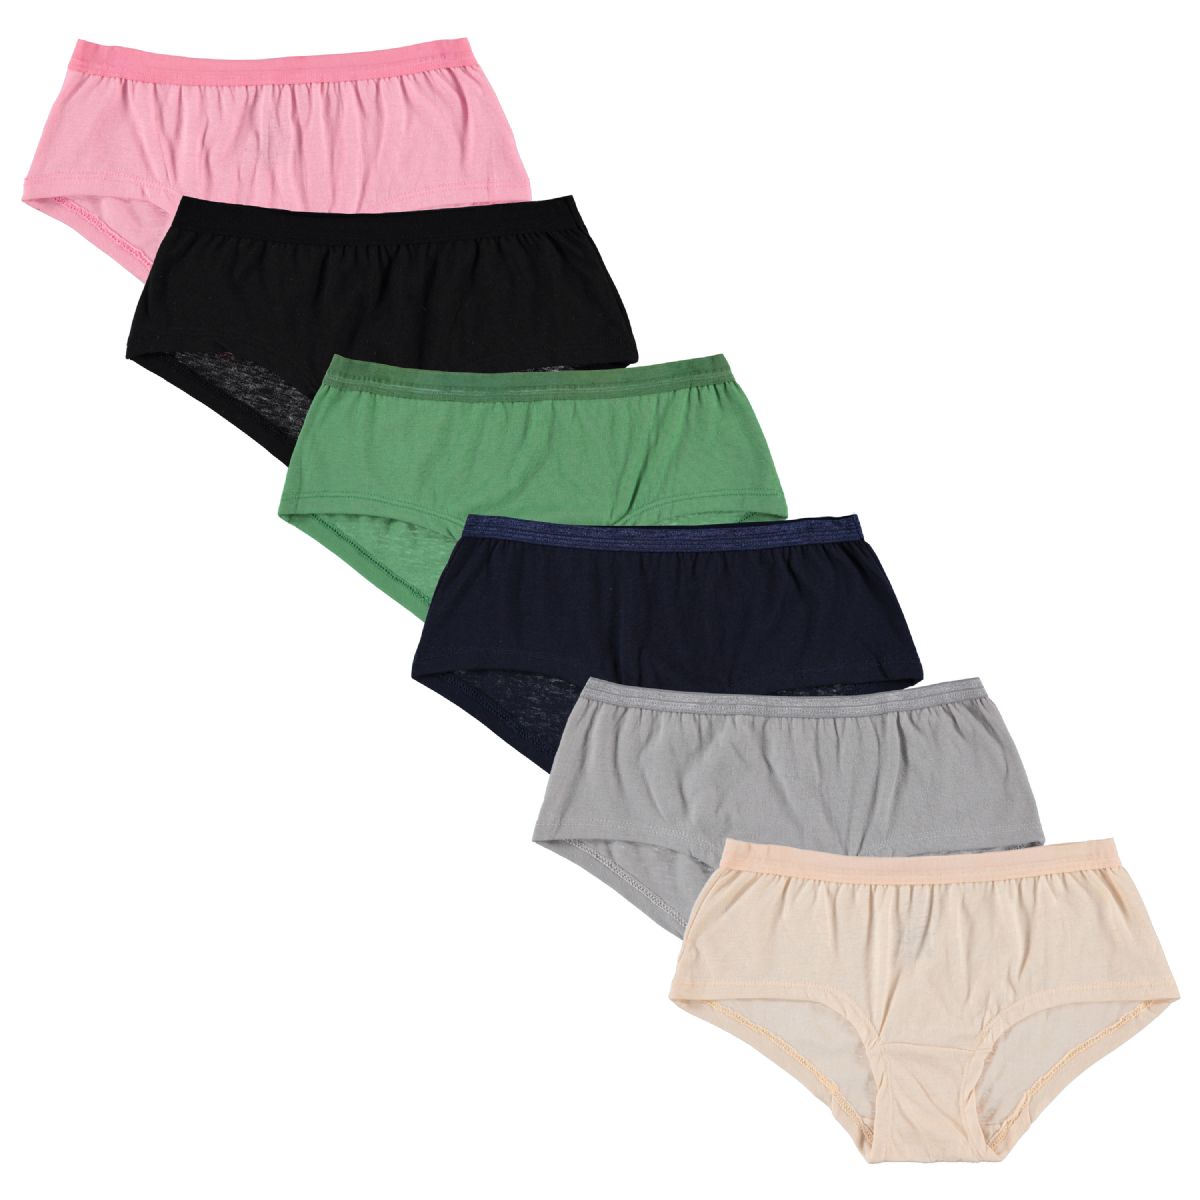 24 Bulk Yacht & Smith Womens Cotton Lycra Underwear, Panty Briefs, 95% Cotton Soft Assorted Colors, Size 2X-Large